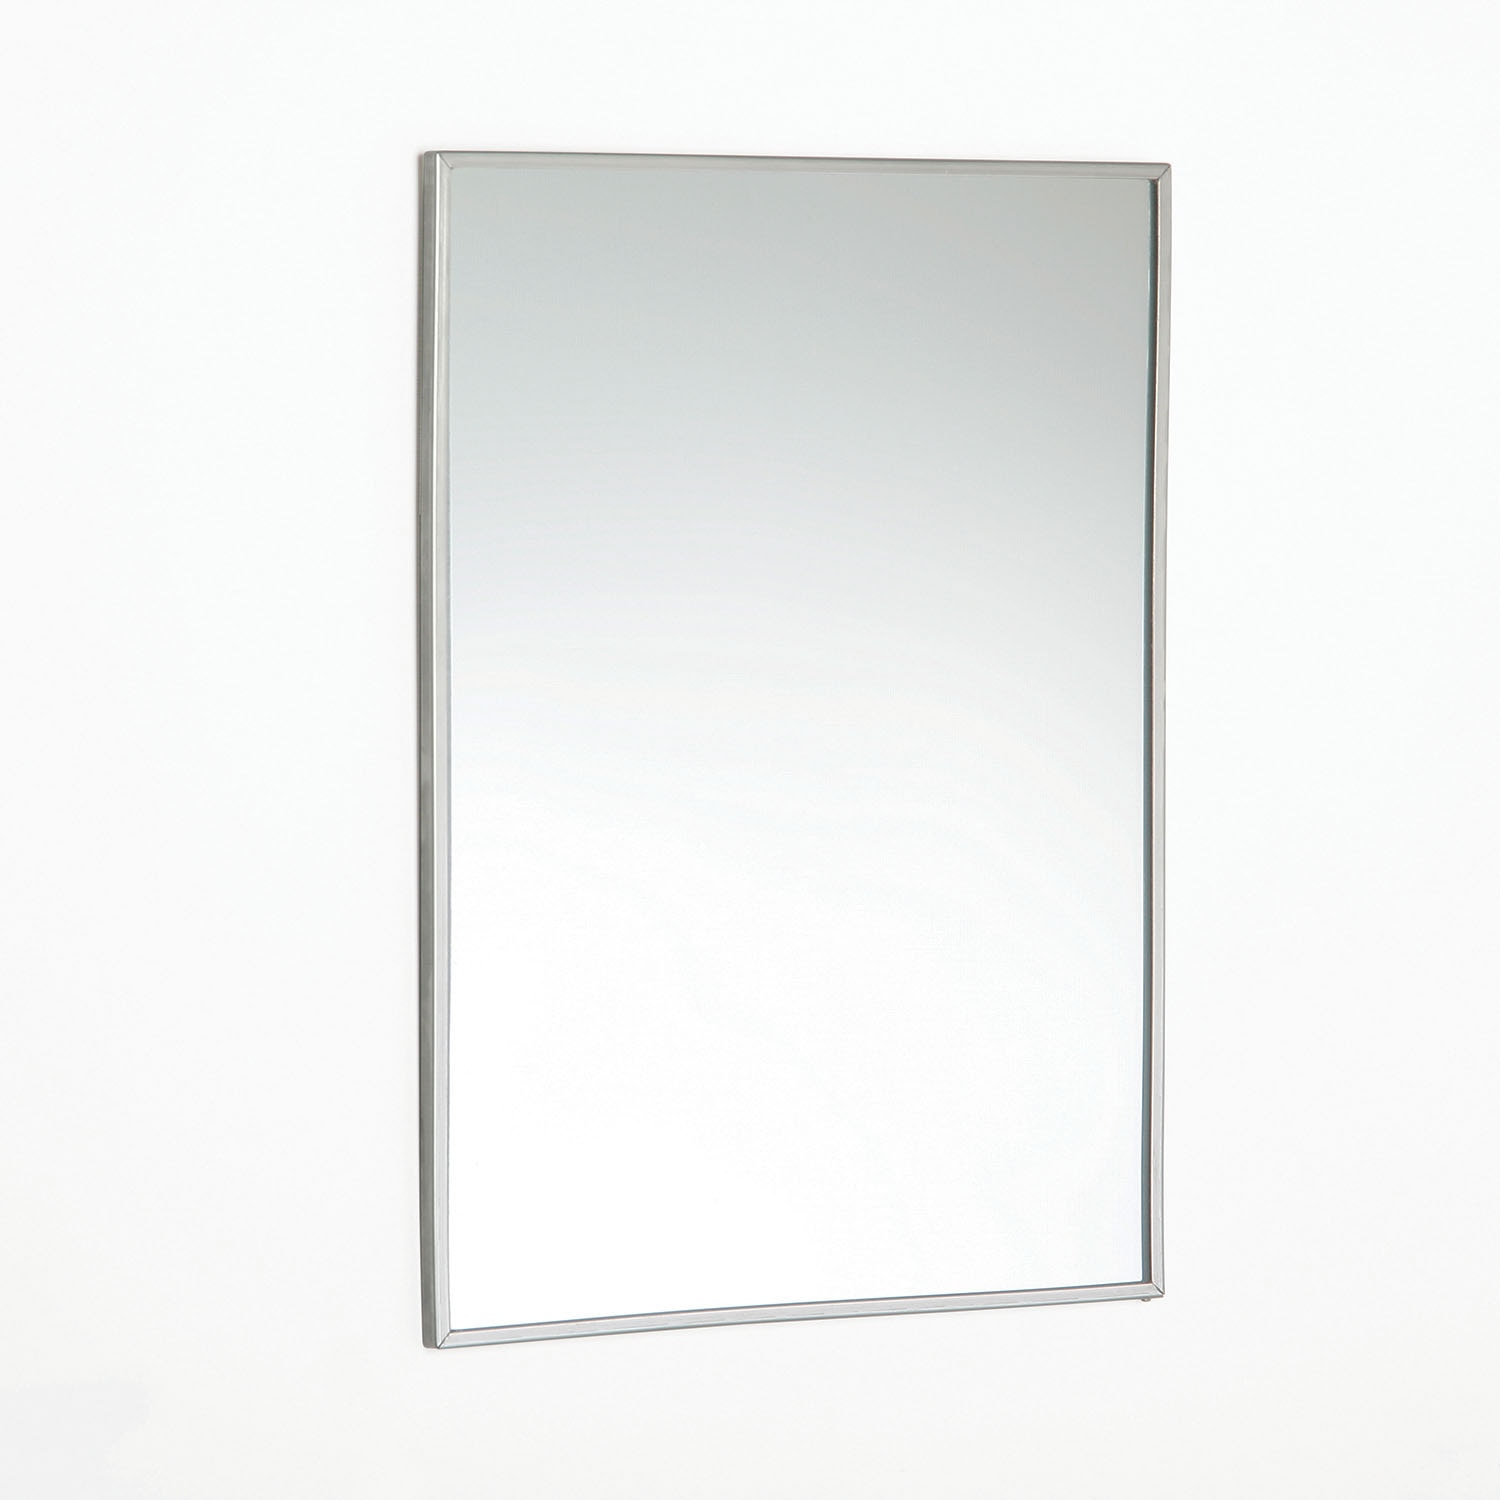 Mirror, Stainless Steel Frame, 16" x 22"